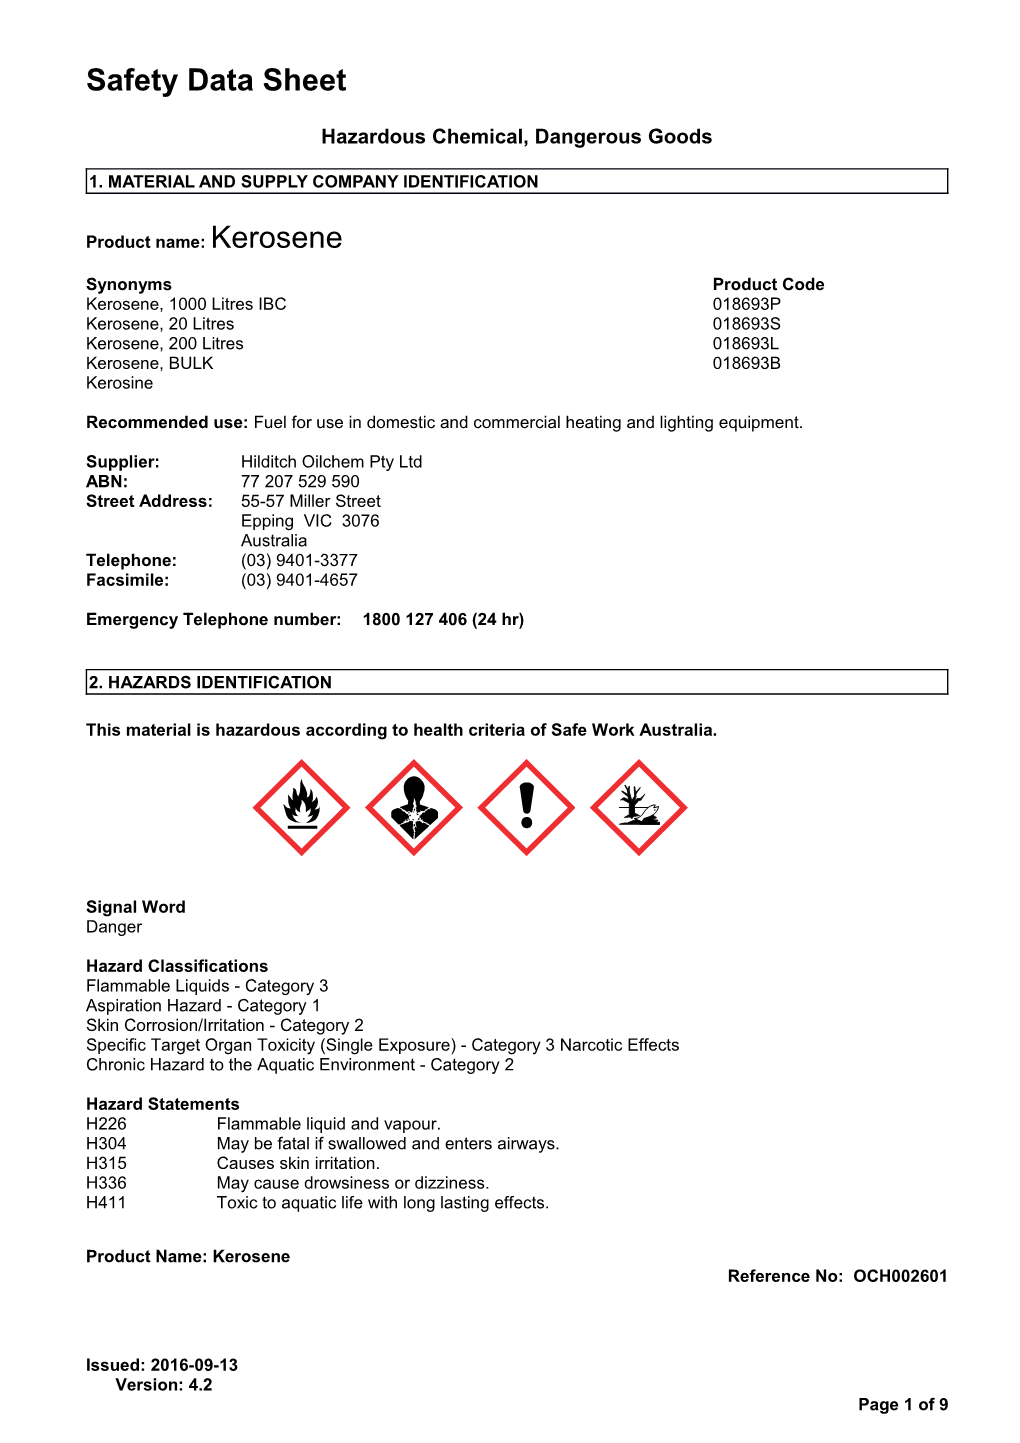 Hazardous Chemical, Dangerous Goods